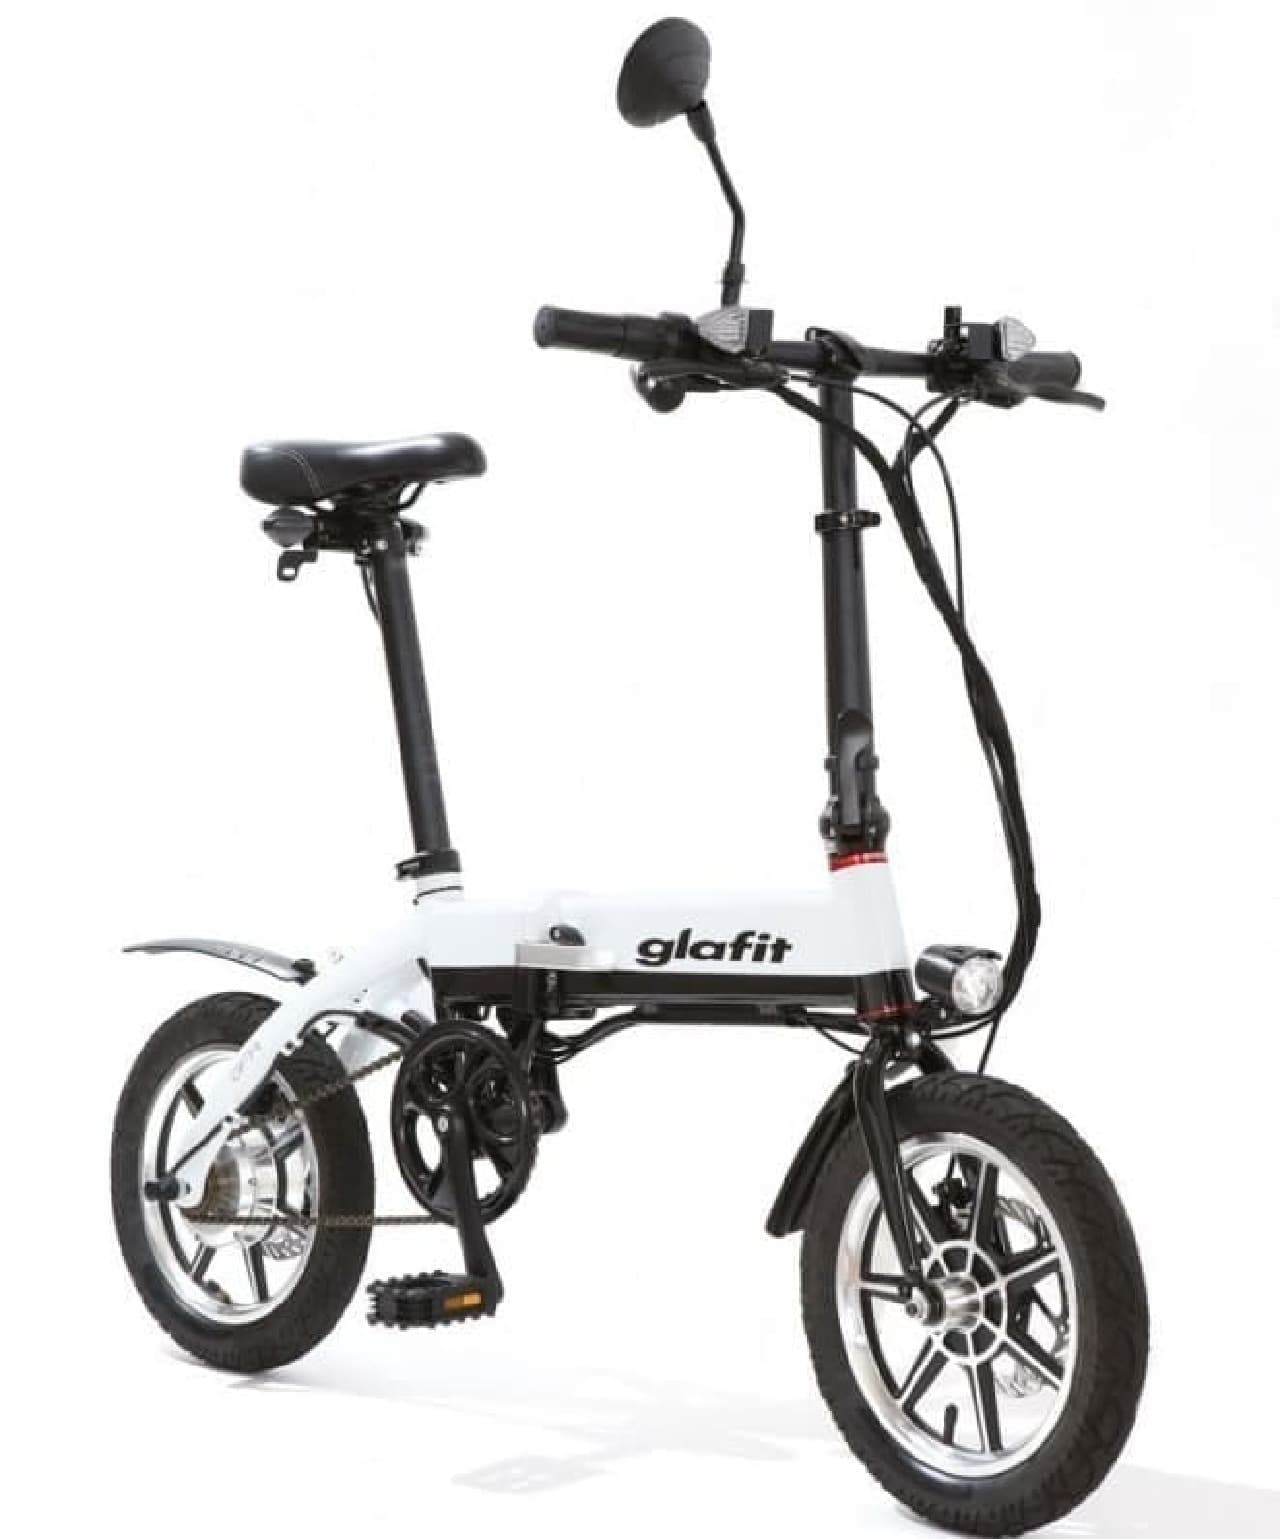 glafitバイク・GFR-01